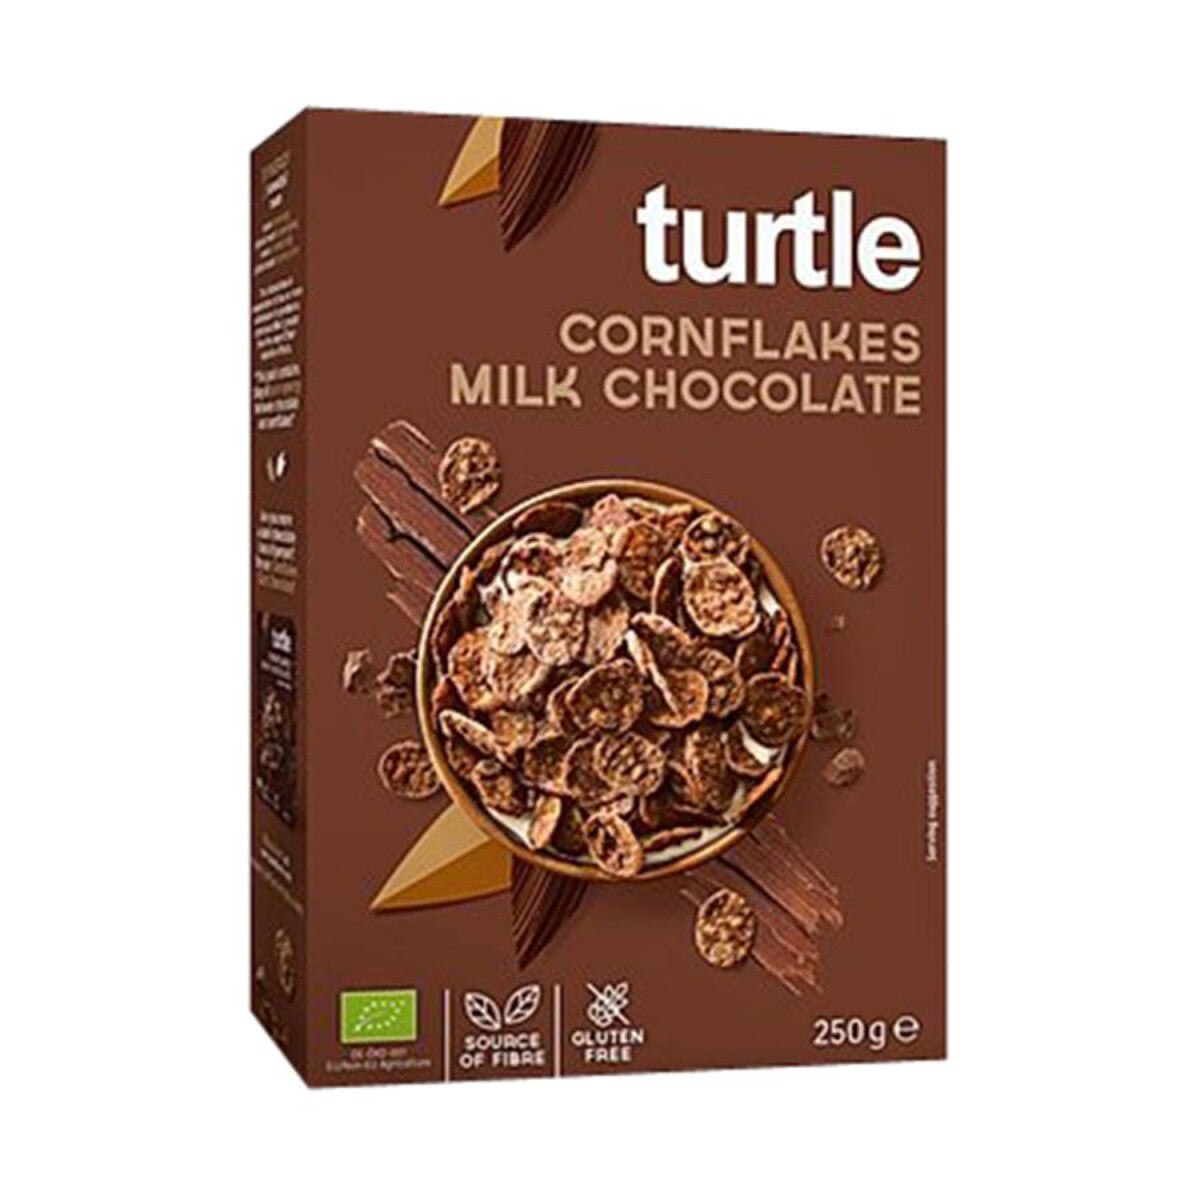 TURTLE Cornflakes Milk Chocolate - 250 g